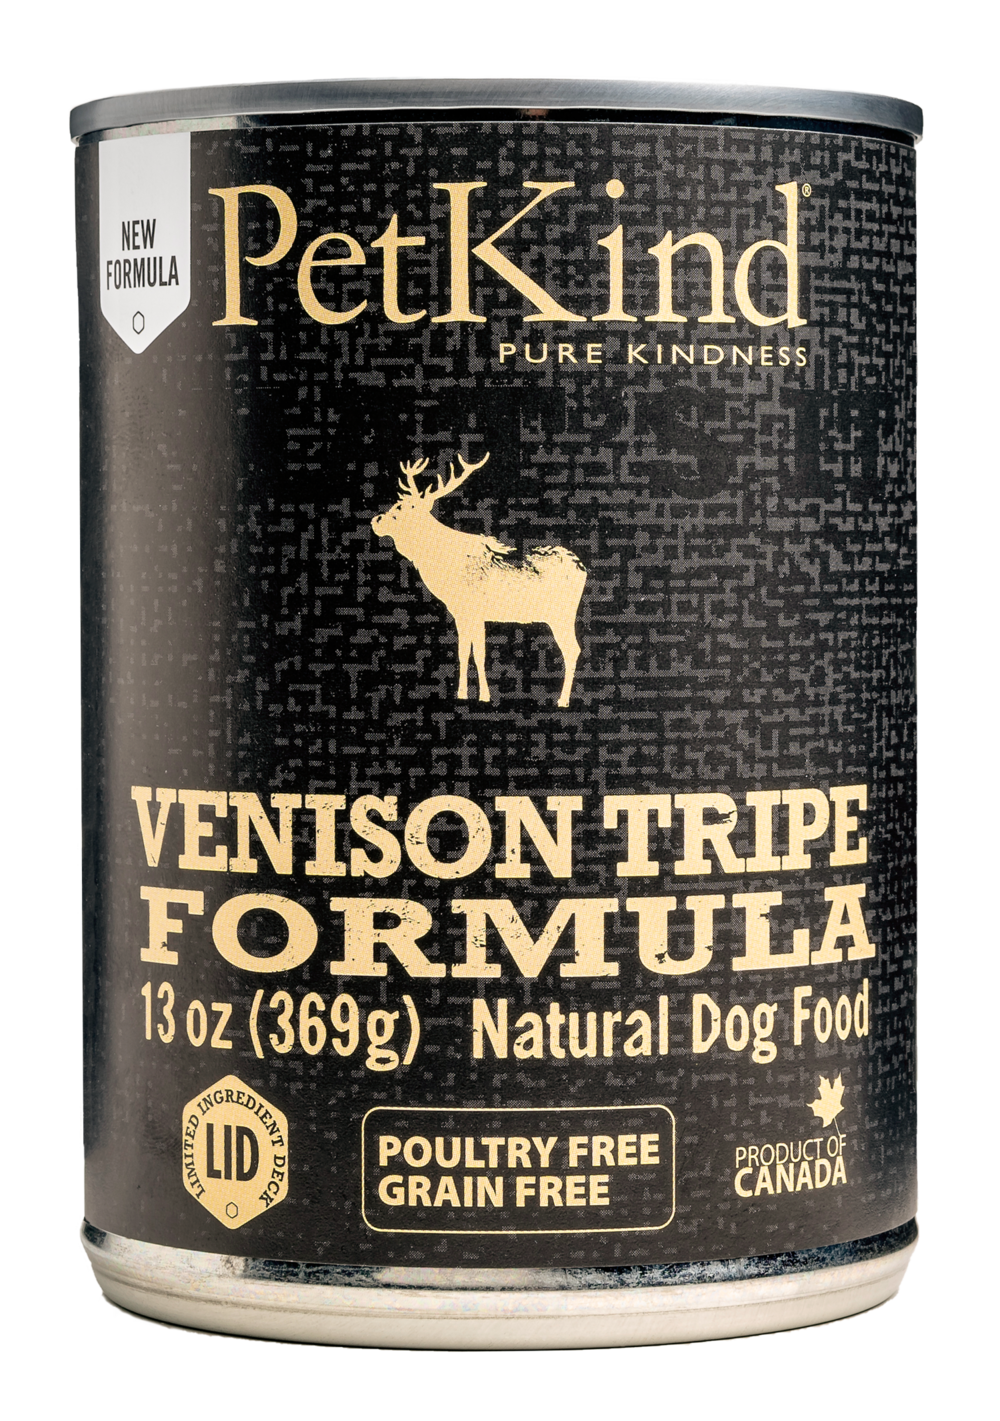 PetKind Venison Tripe Canned Dog Food (13oz/369g)